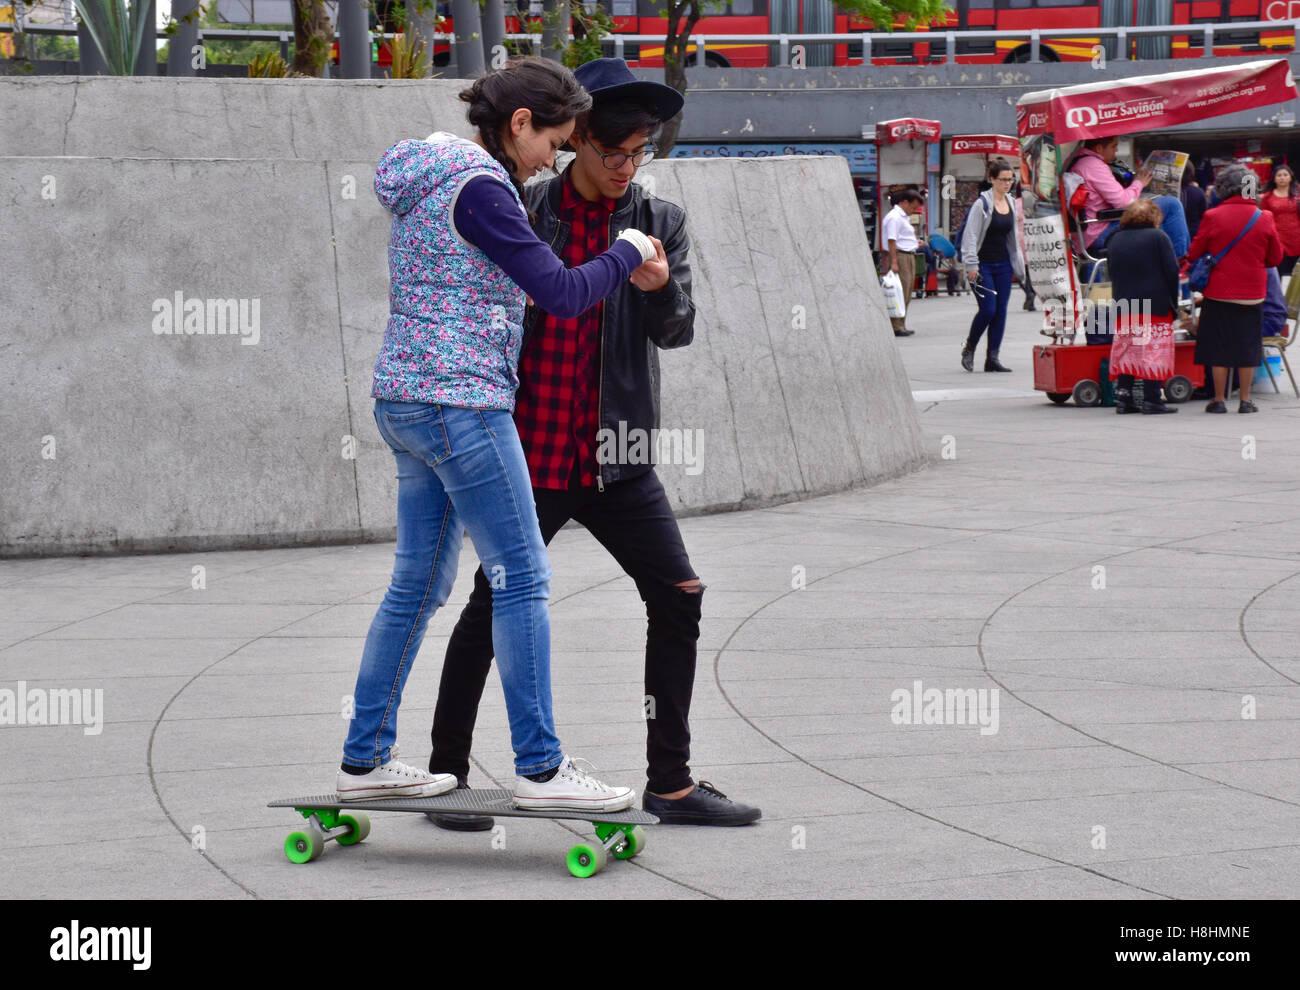 Mexican boy helping girl learn to skateboard, Mexico City, Mexico Stock Photo